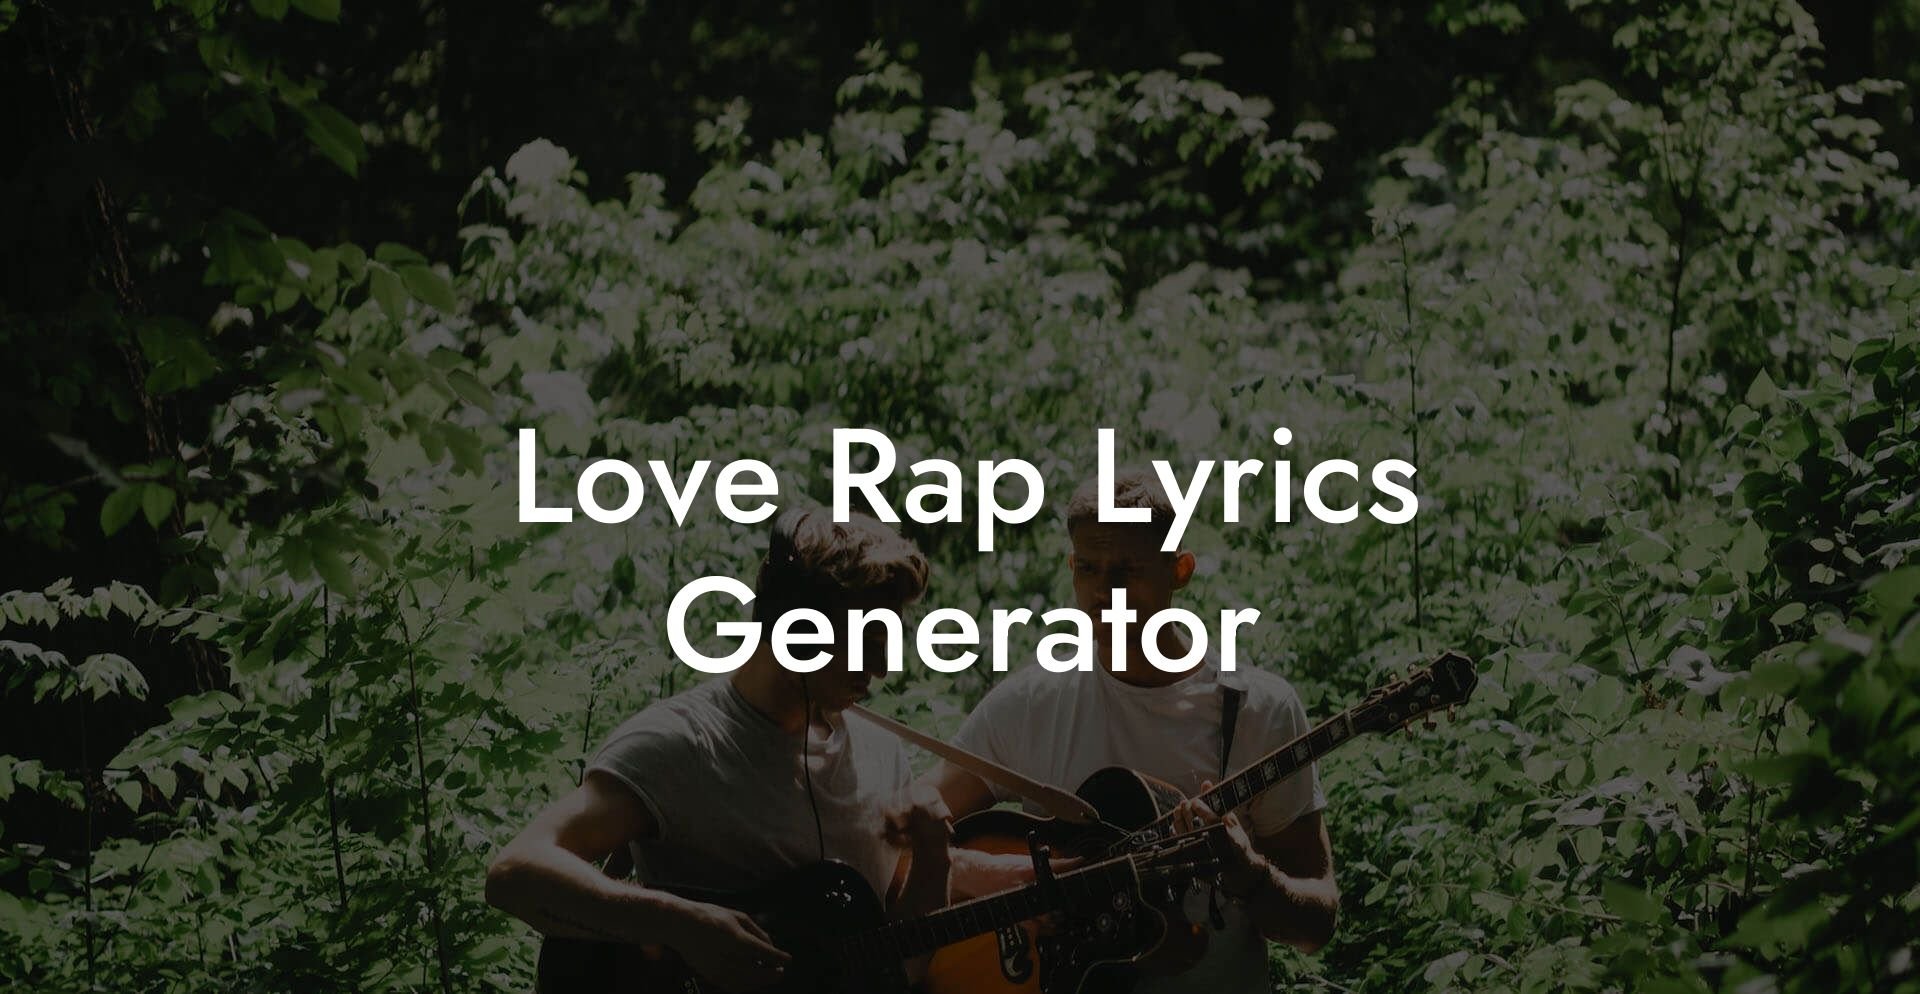 love rap lyrics generator lyric assistant